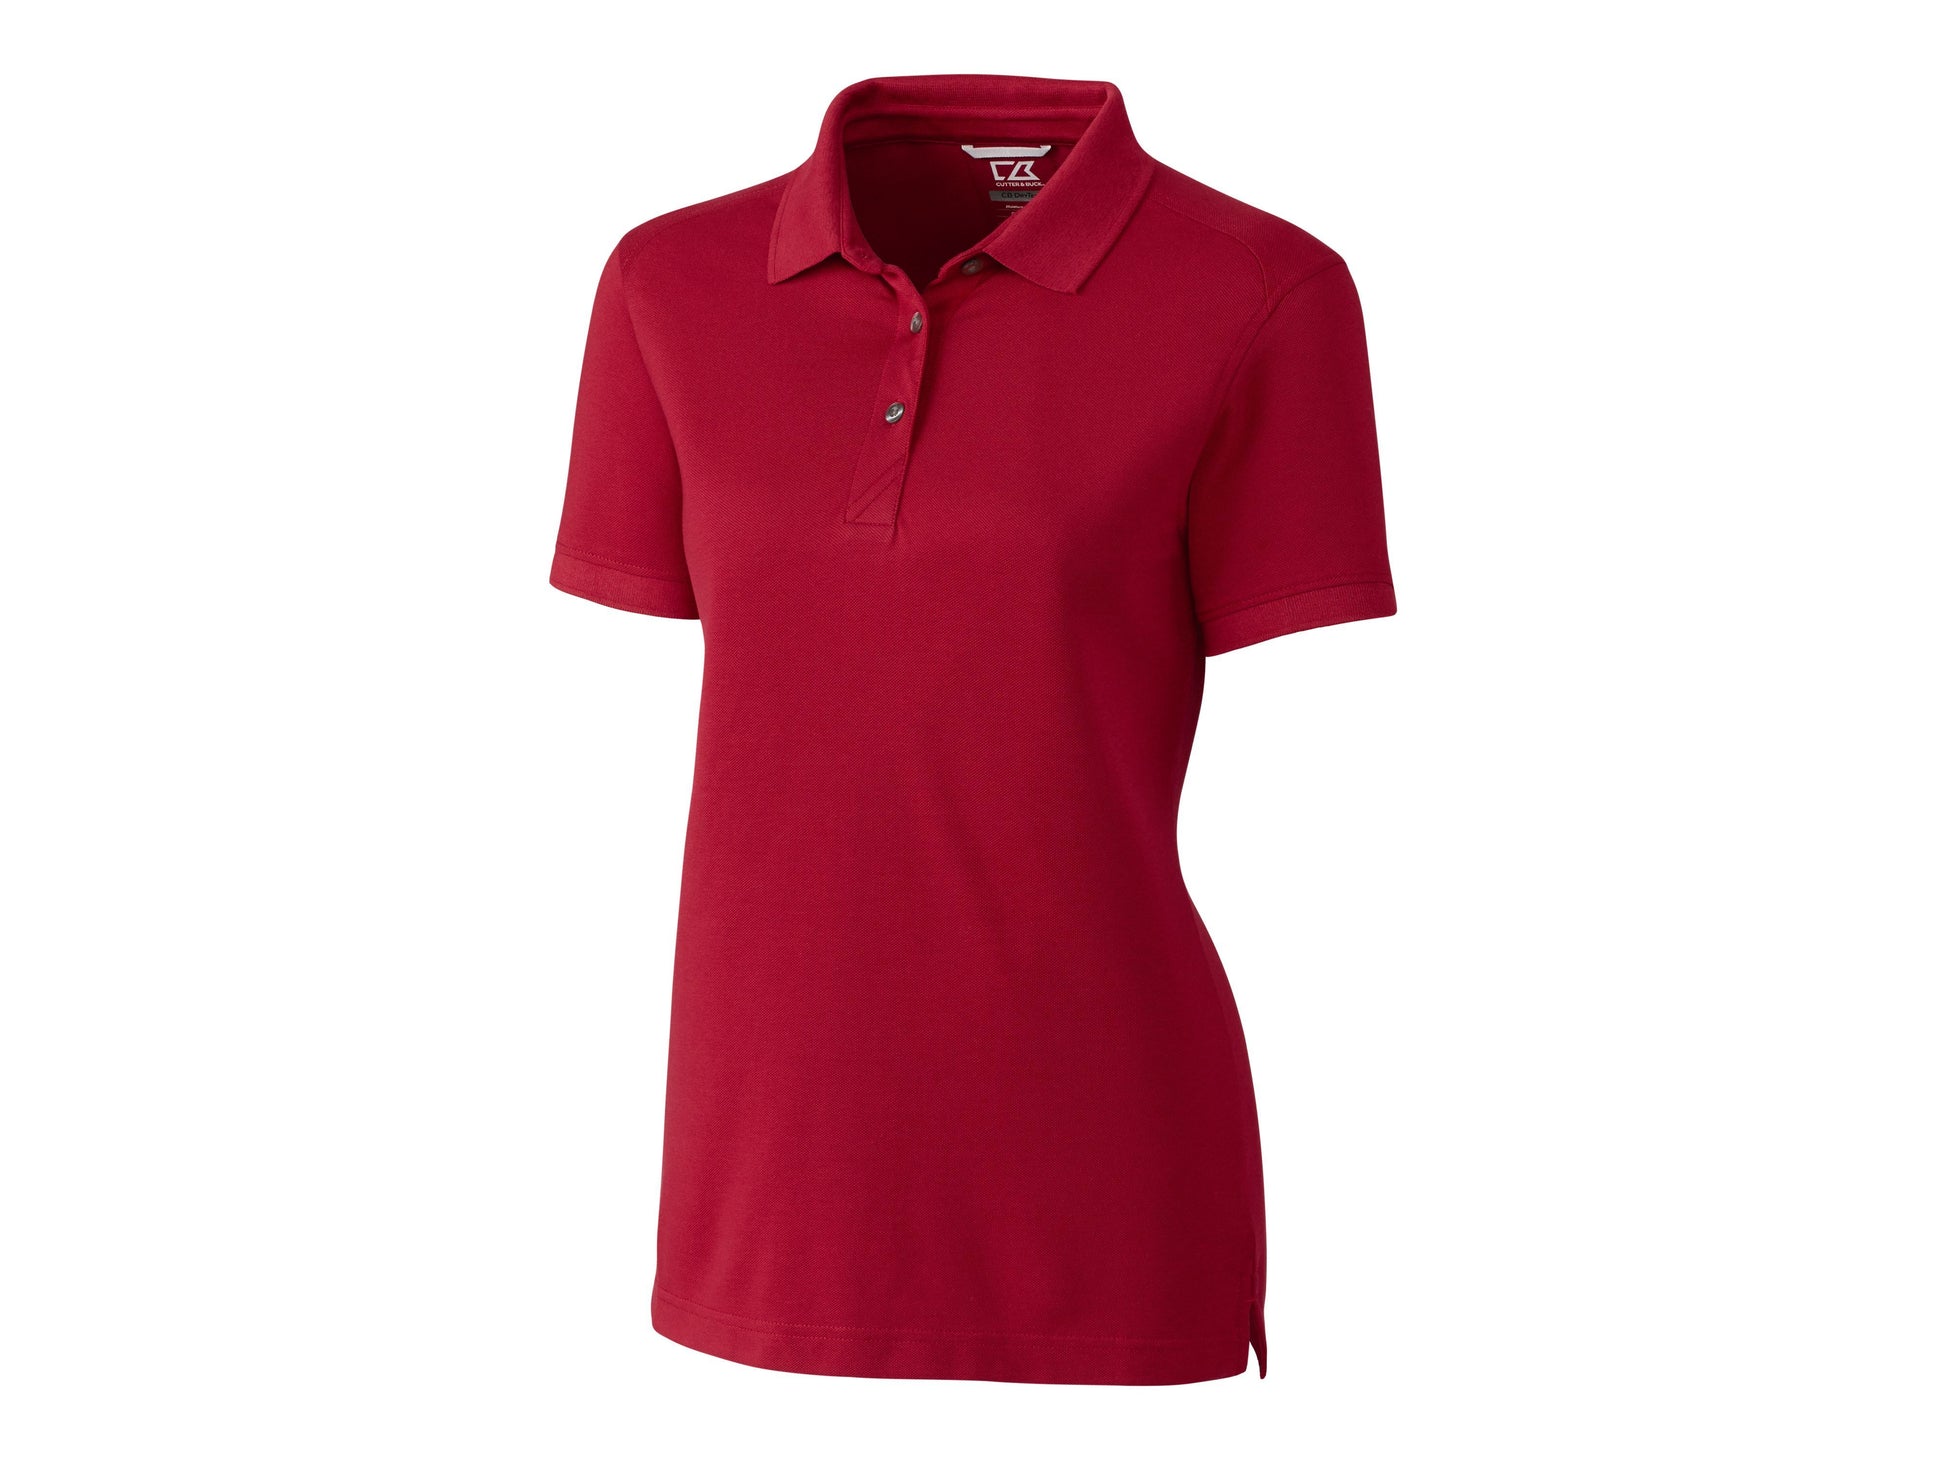 Cutter and Buck Shirts Advantage Polo (Women's Cut) - LCK08685 - Cardinal Red